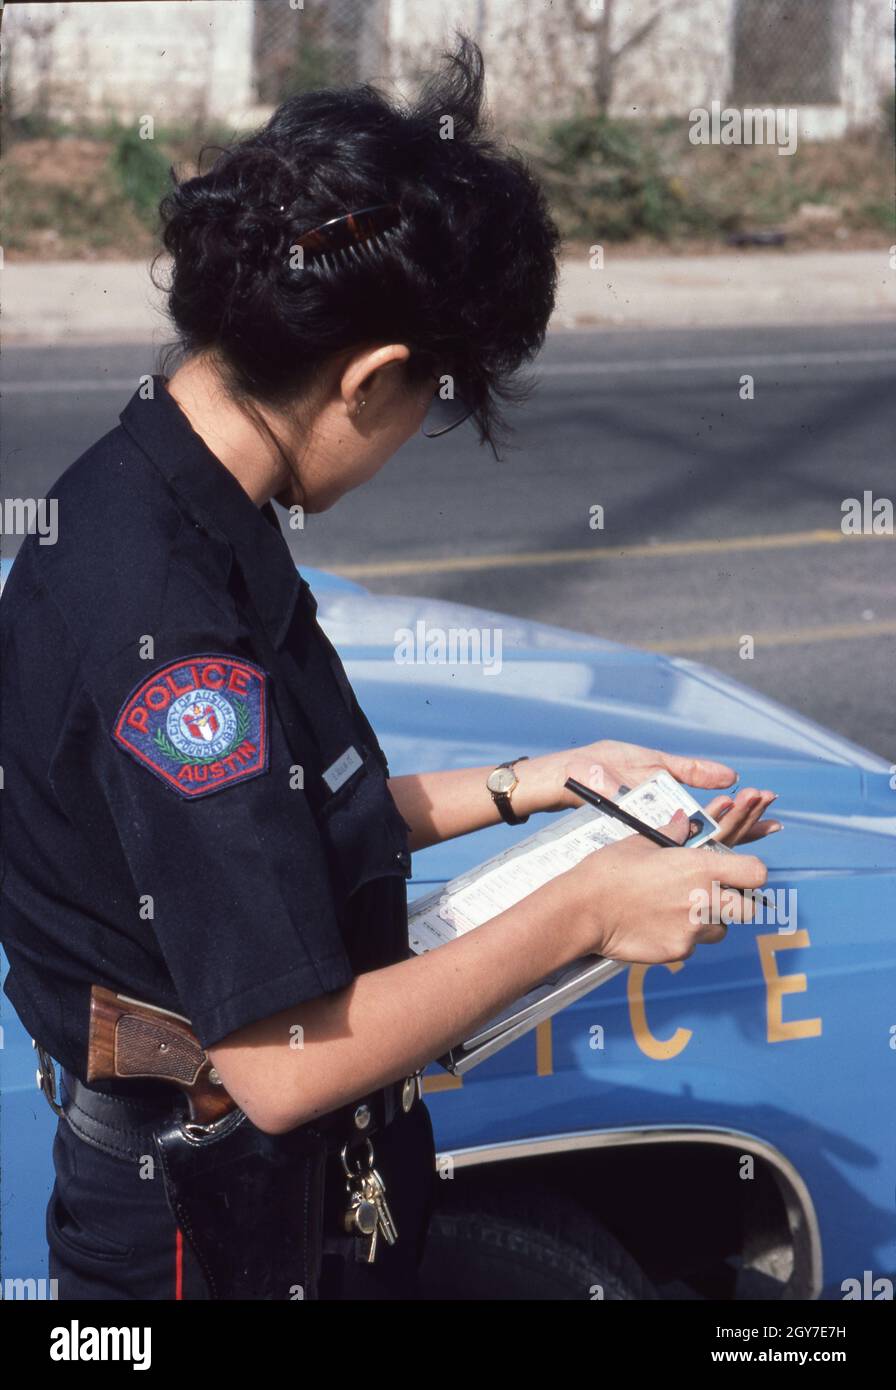 Austin Texas USA, circa 1991: Hispanic female police officer checks driver's license of motorist during traffic stop. ©Bob Daemmrich Stock Photo